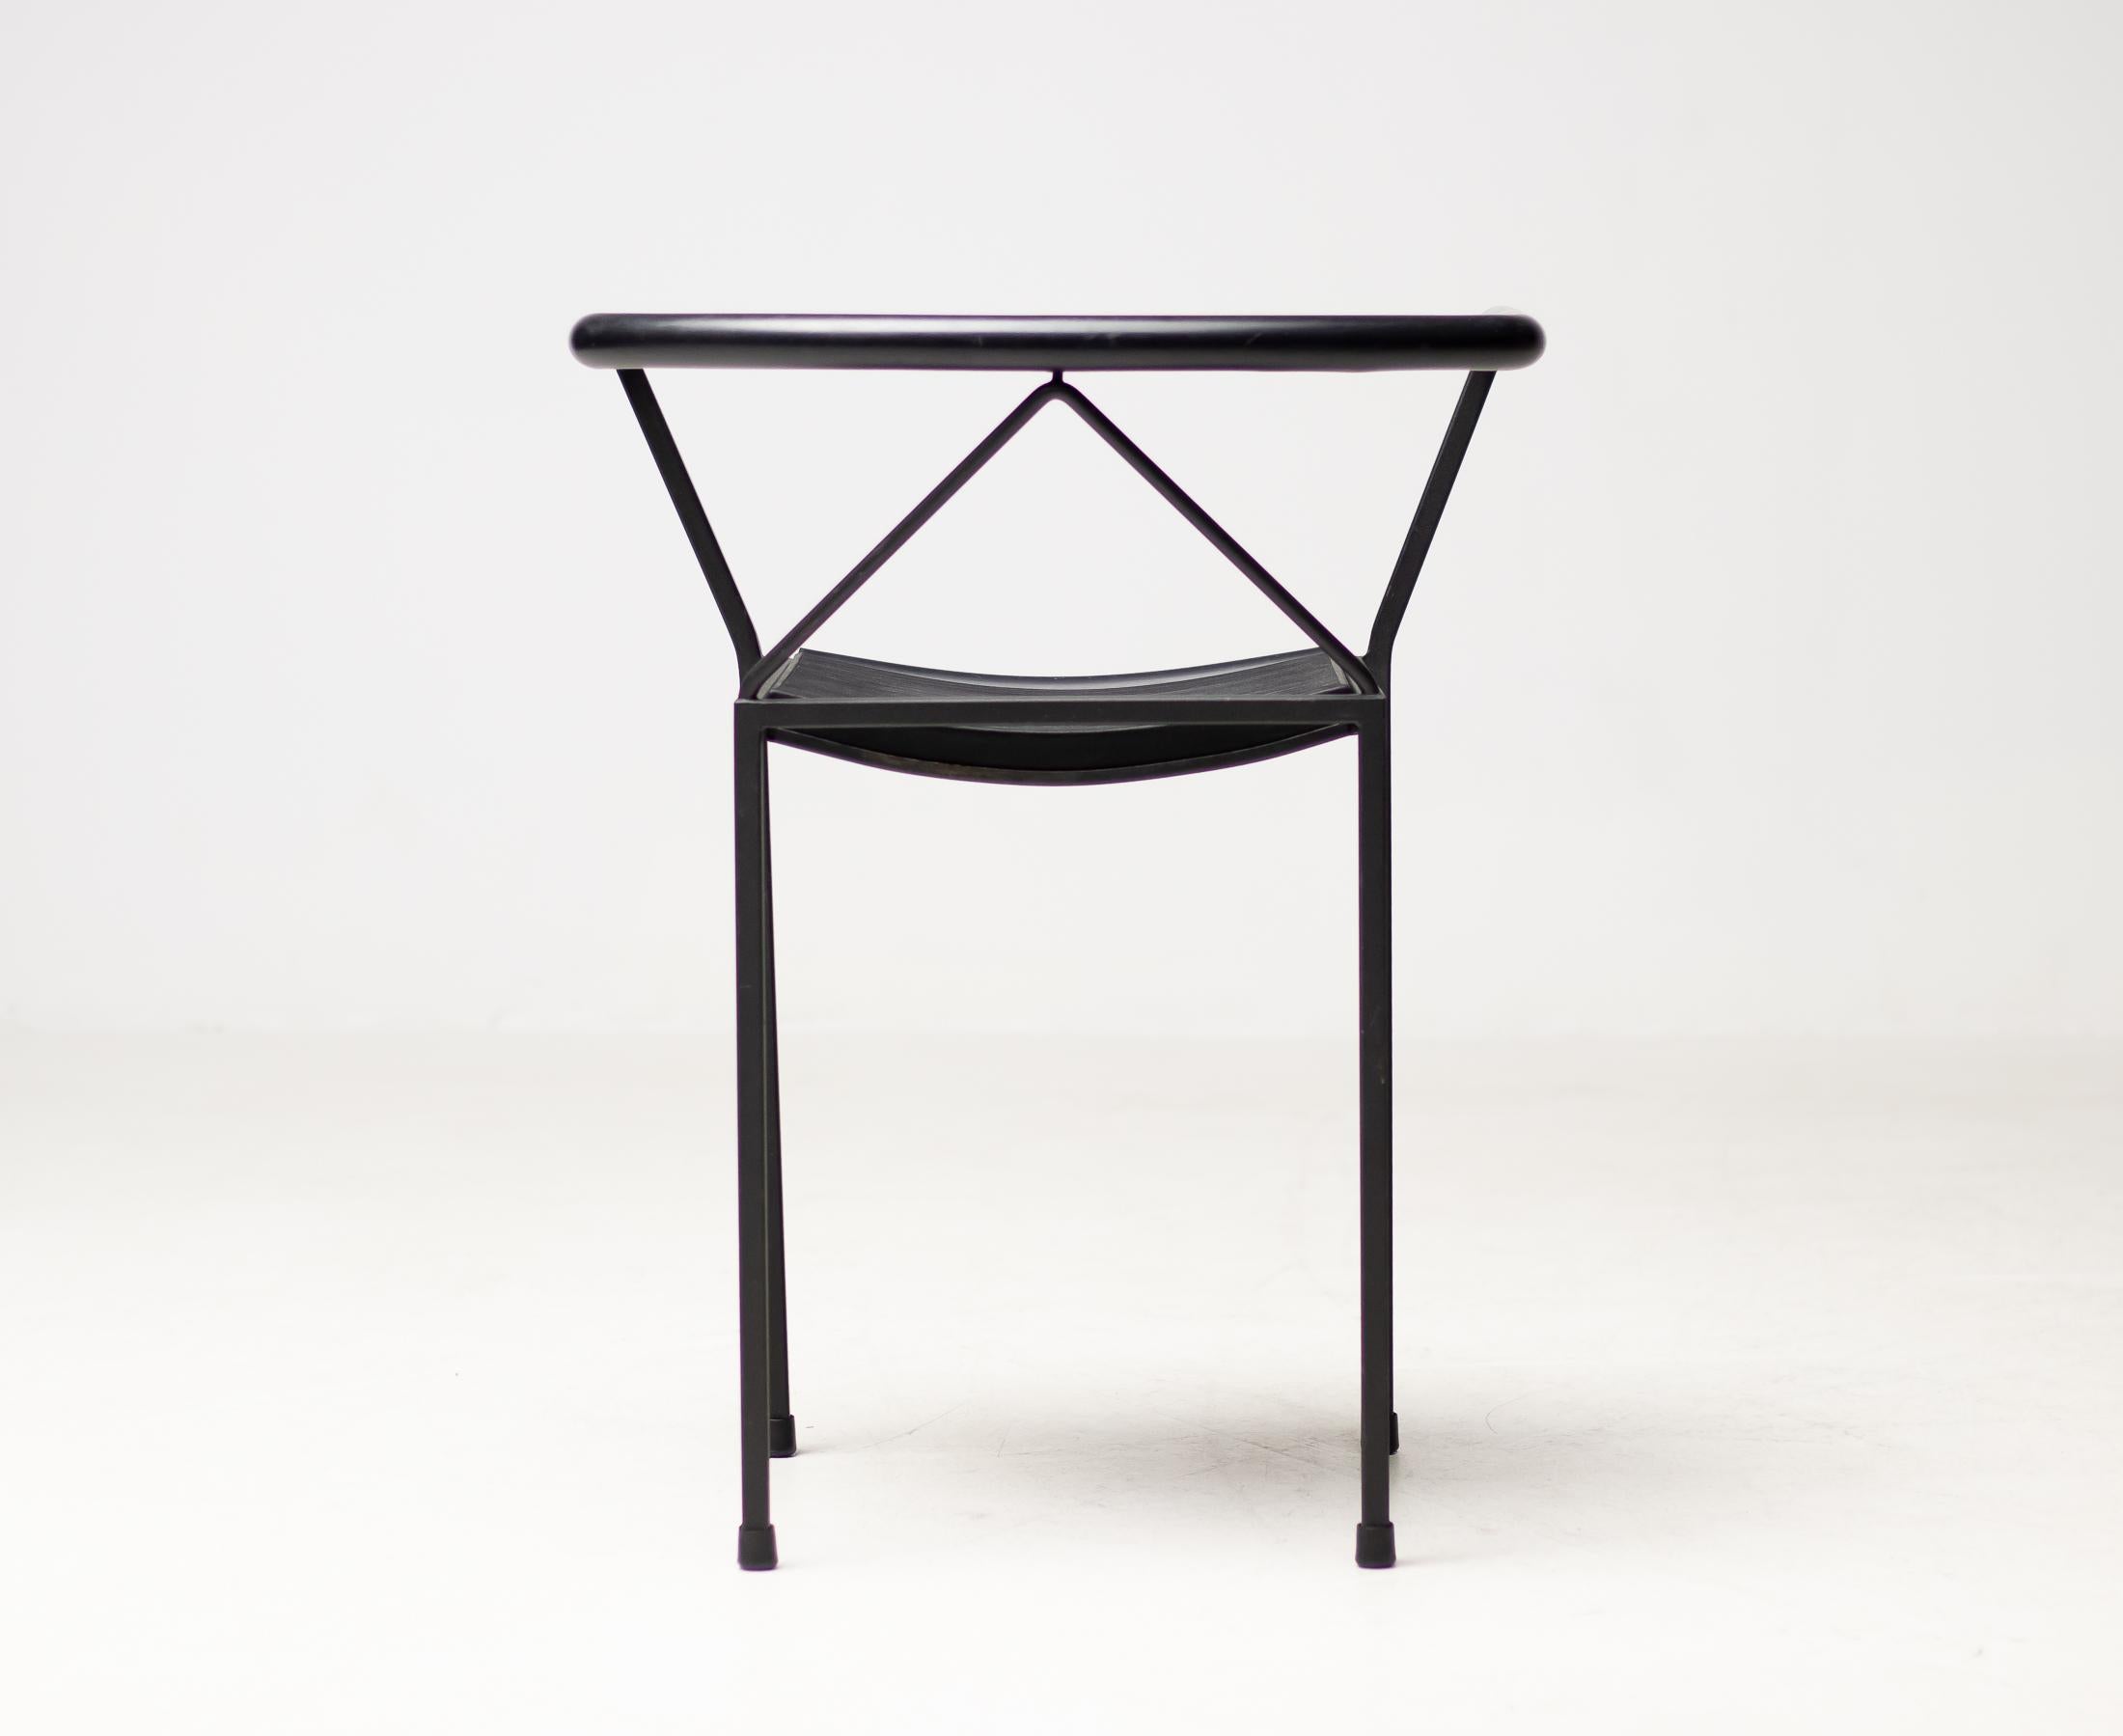 Italian Set of Six Poltroncina Chairs by Maurizio Peregalli